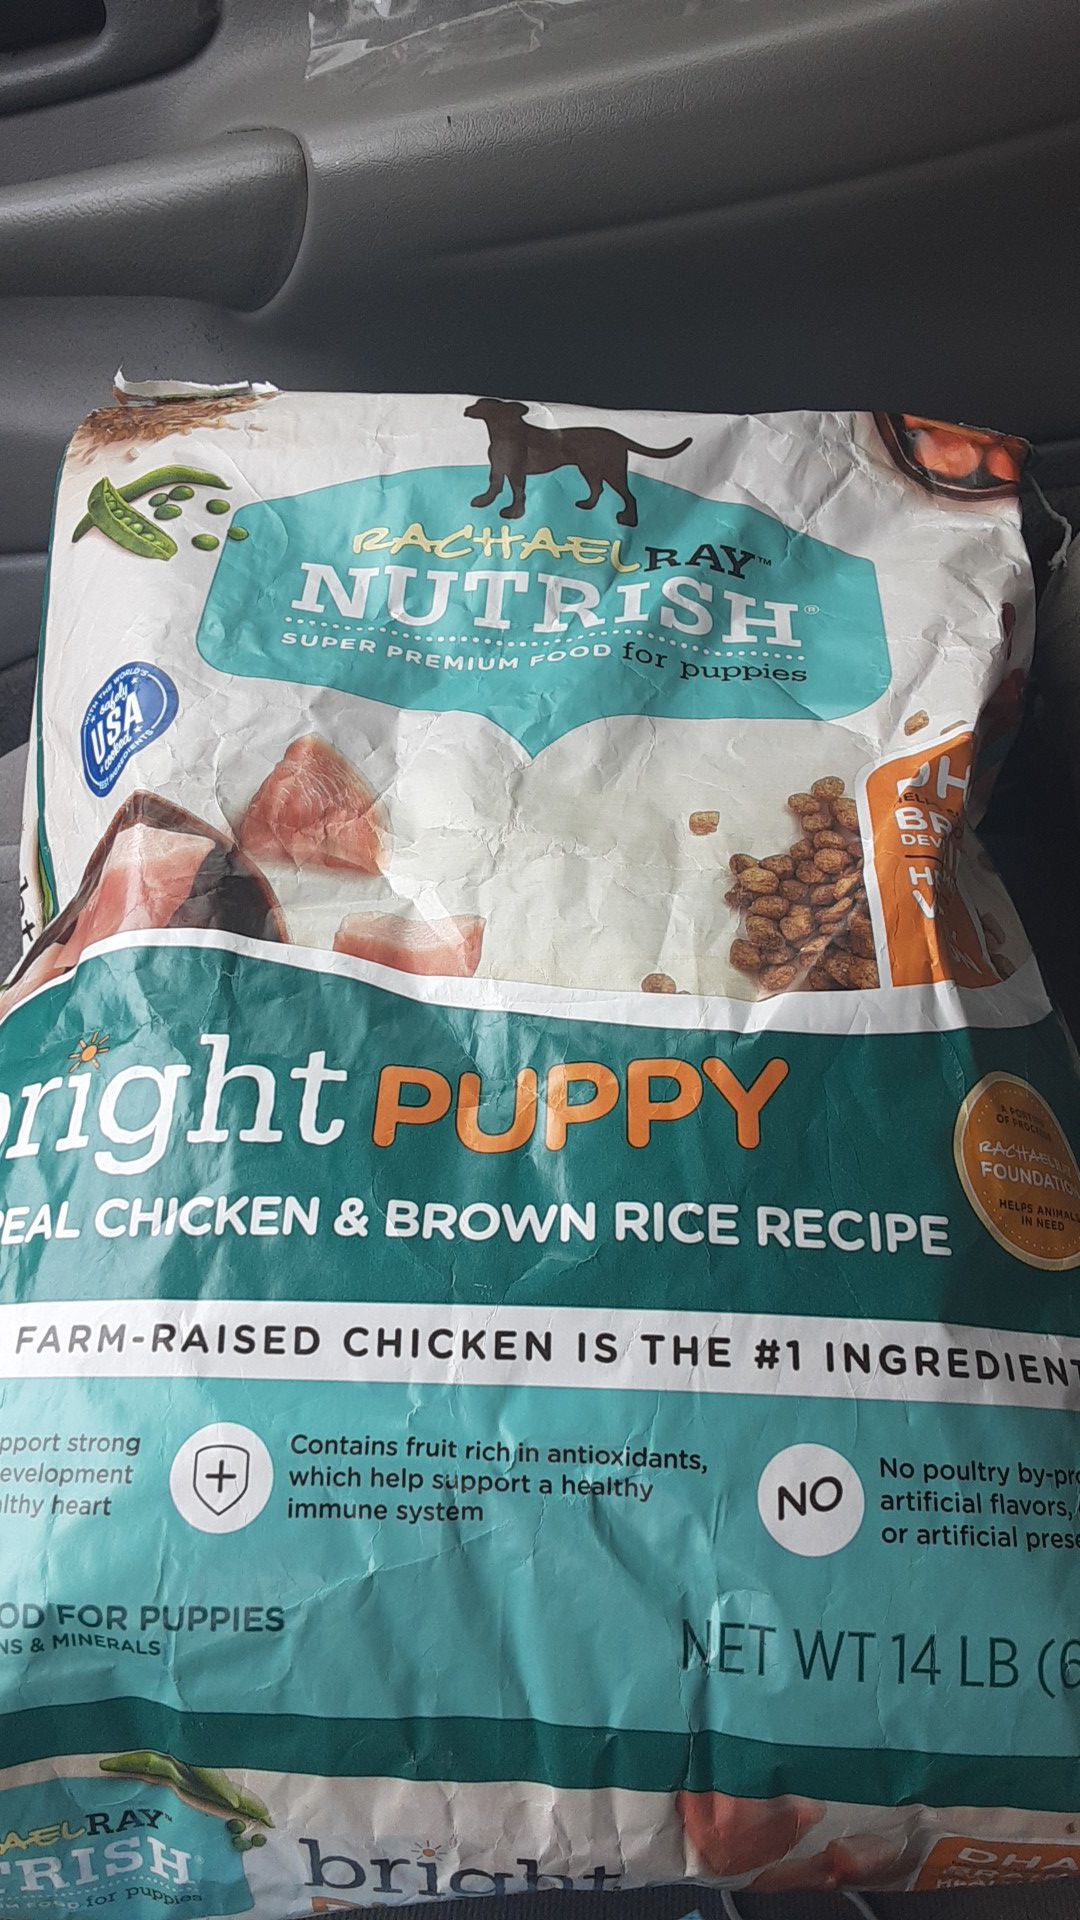 Rachel Ray Nutrish Dog Food (Puppy)